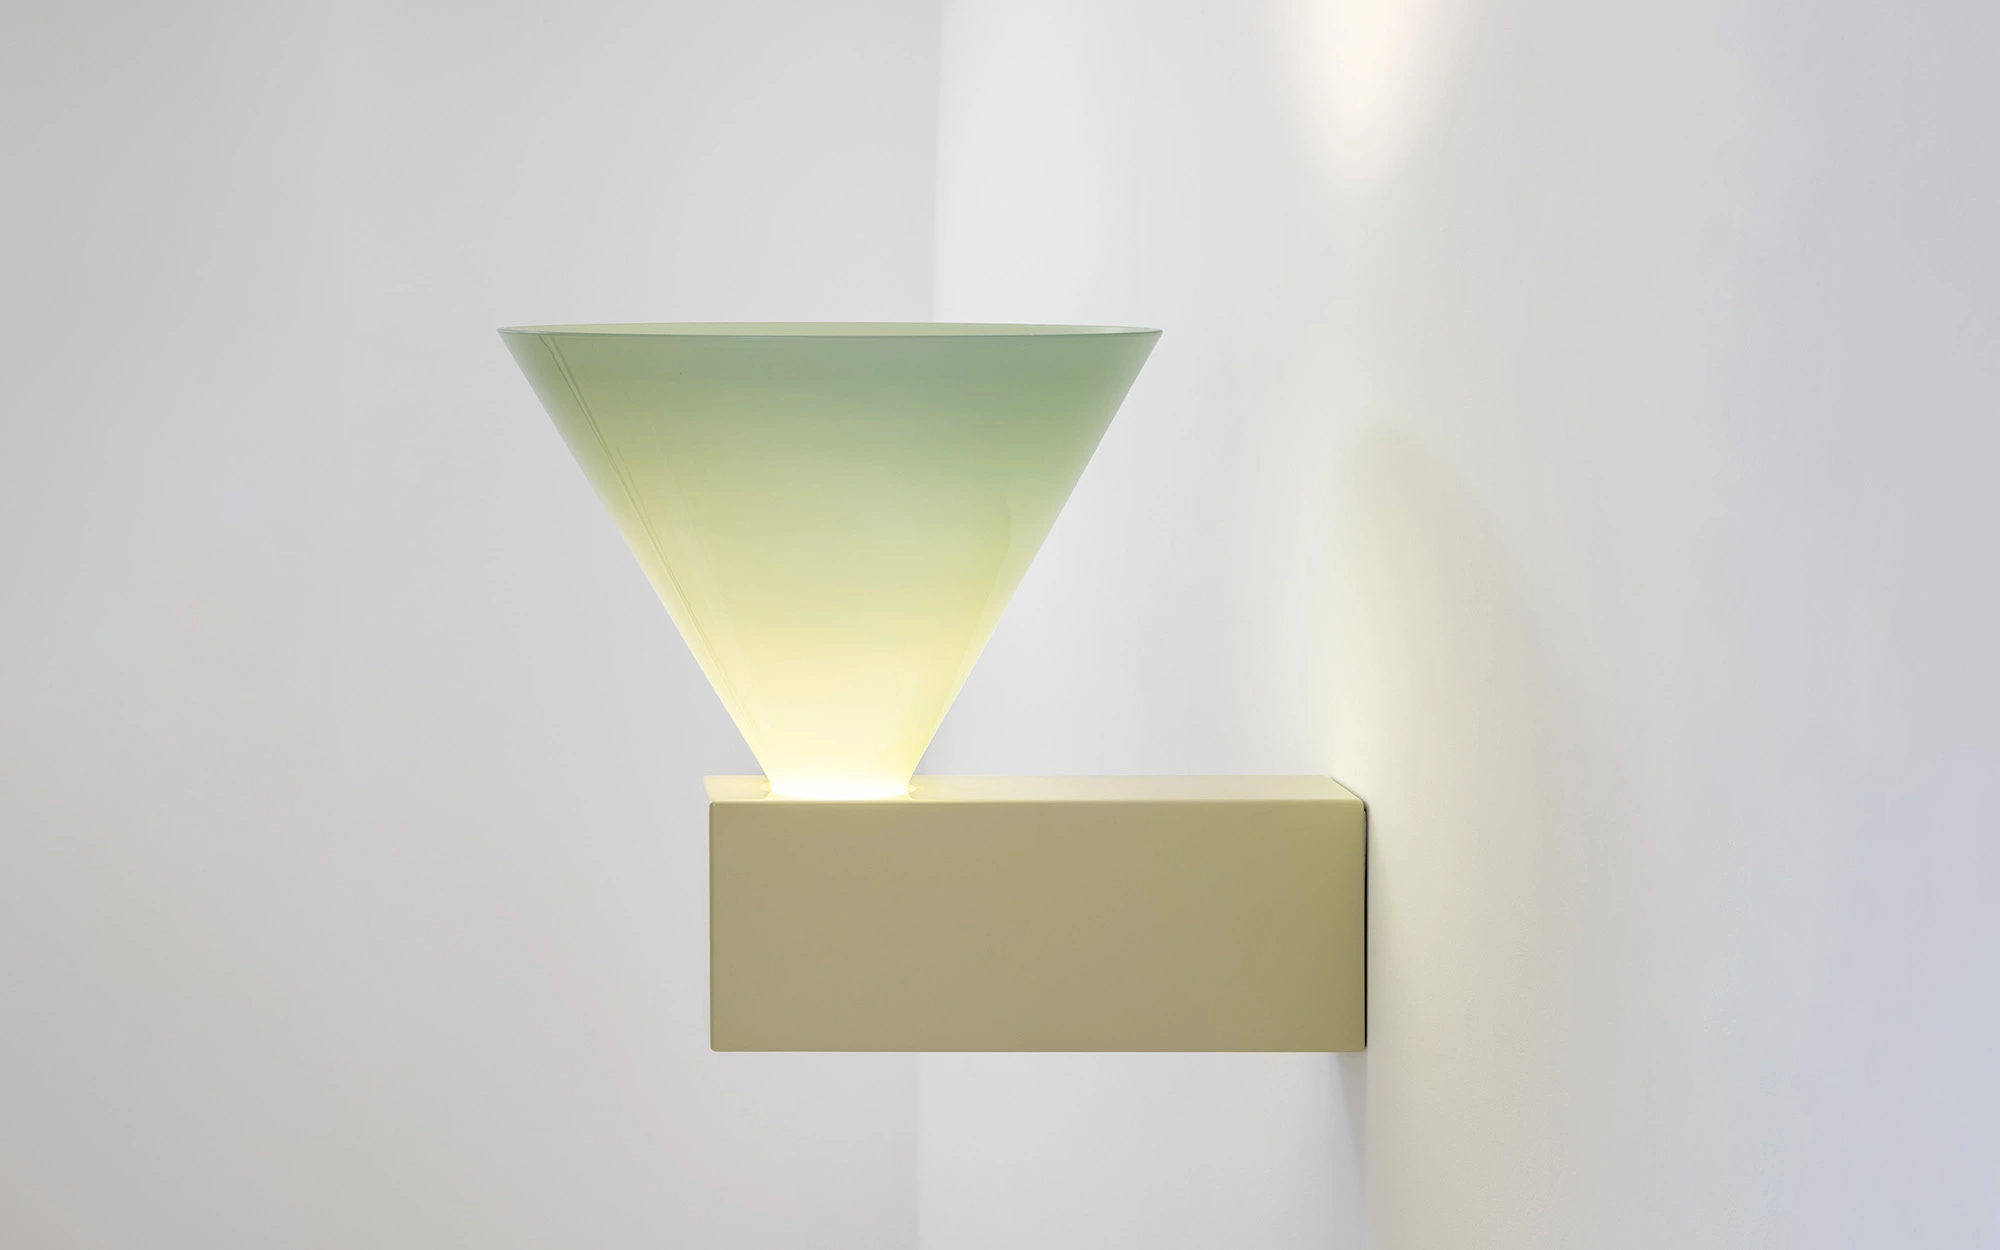 Signal W MONOCHROMATIC - Edward Barber & Jay Osgerby - Floor light - Galerie kreo